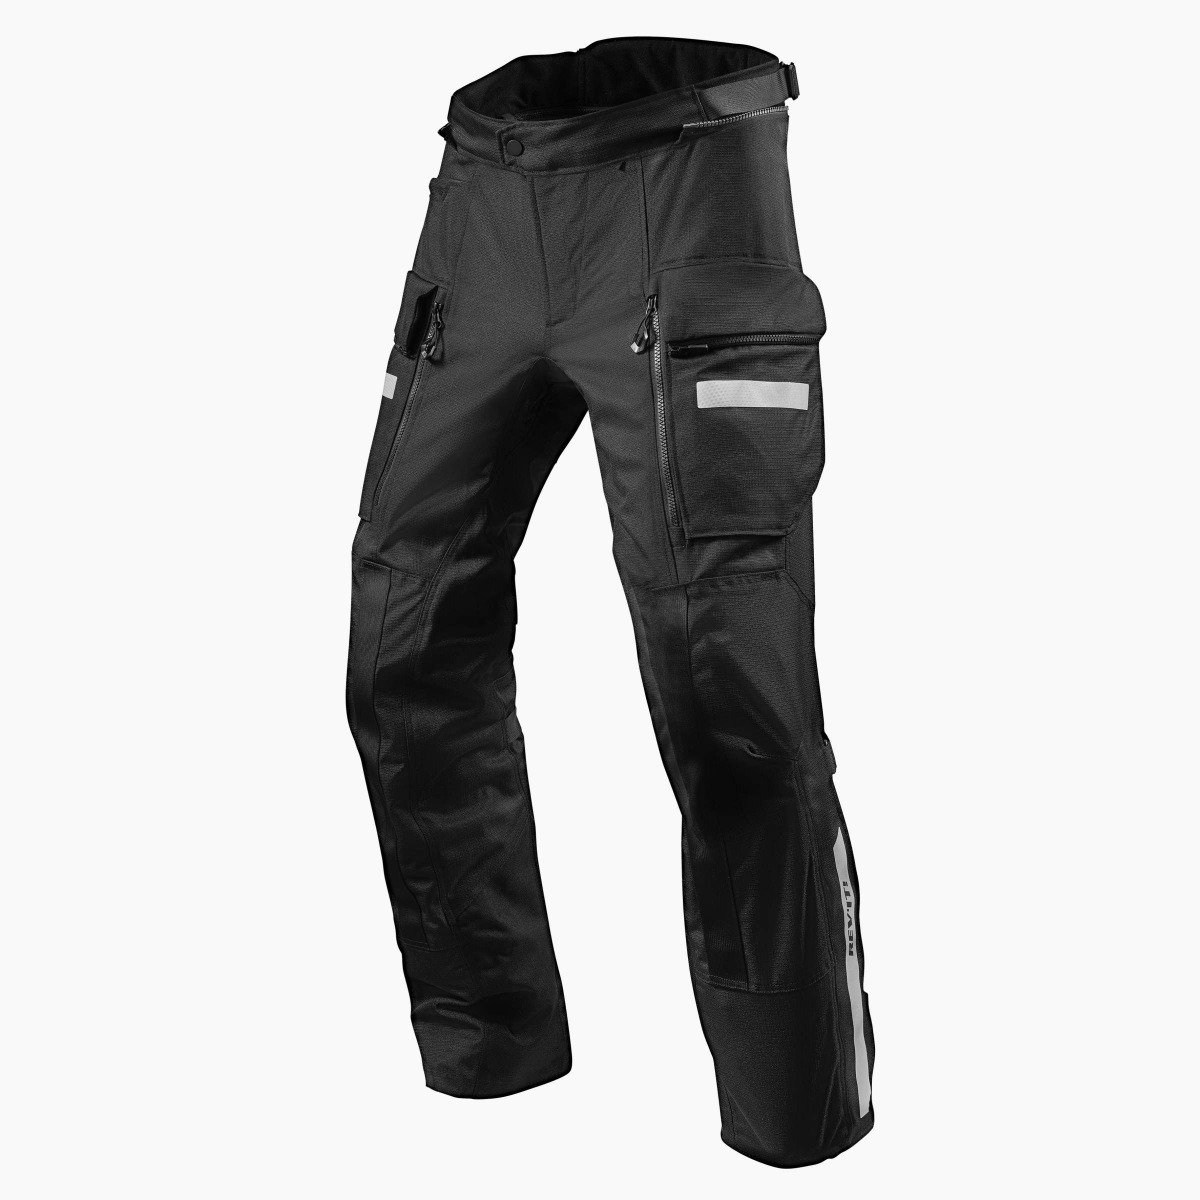 Image of REV'IT! Sand 4 H2O Short Black Motorcycle Pants Size XL EN